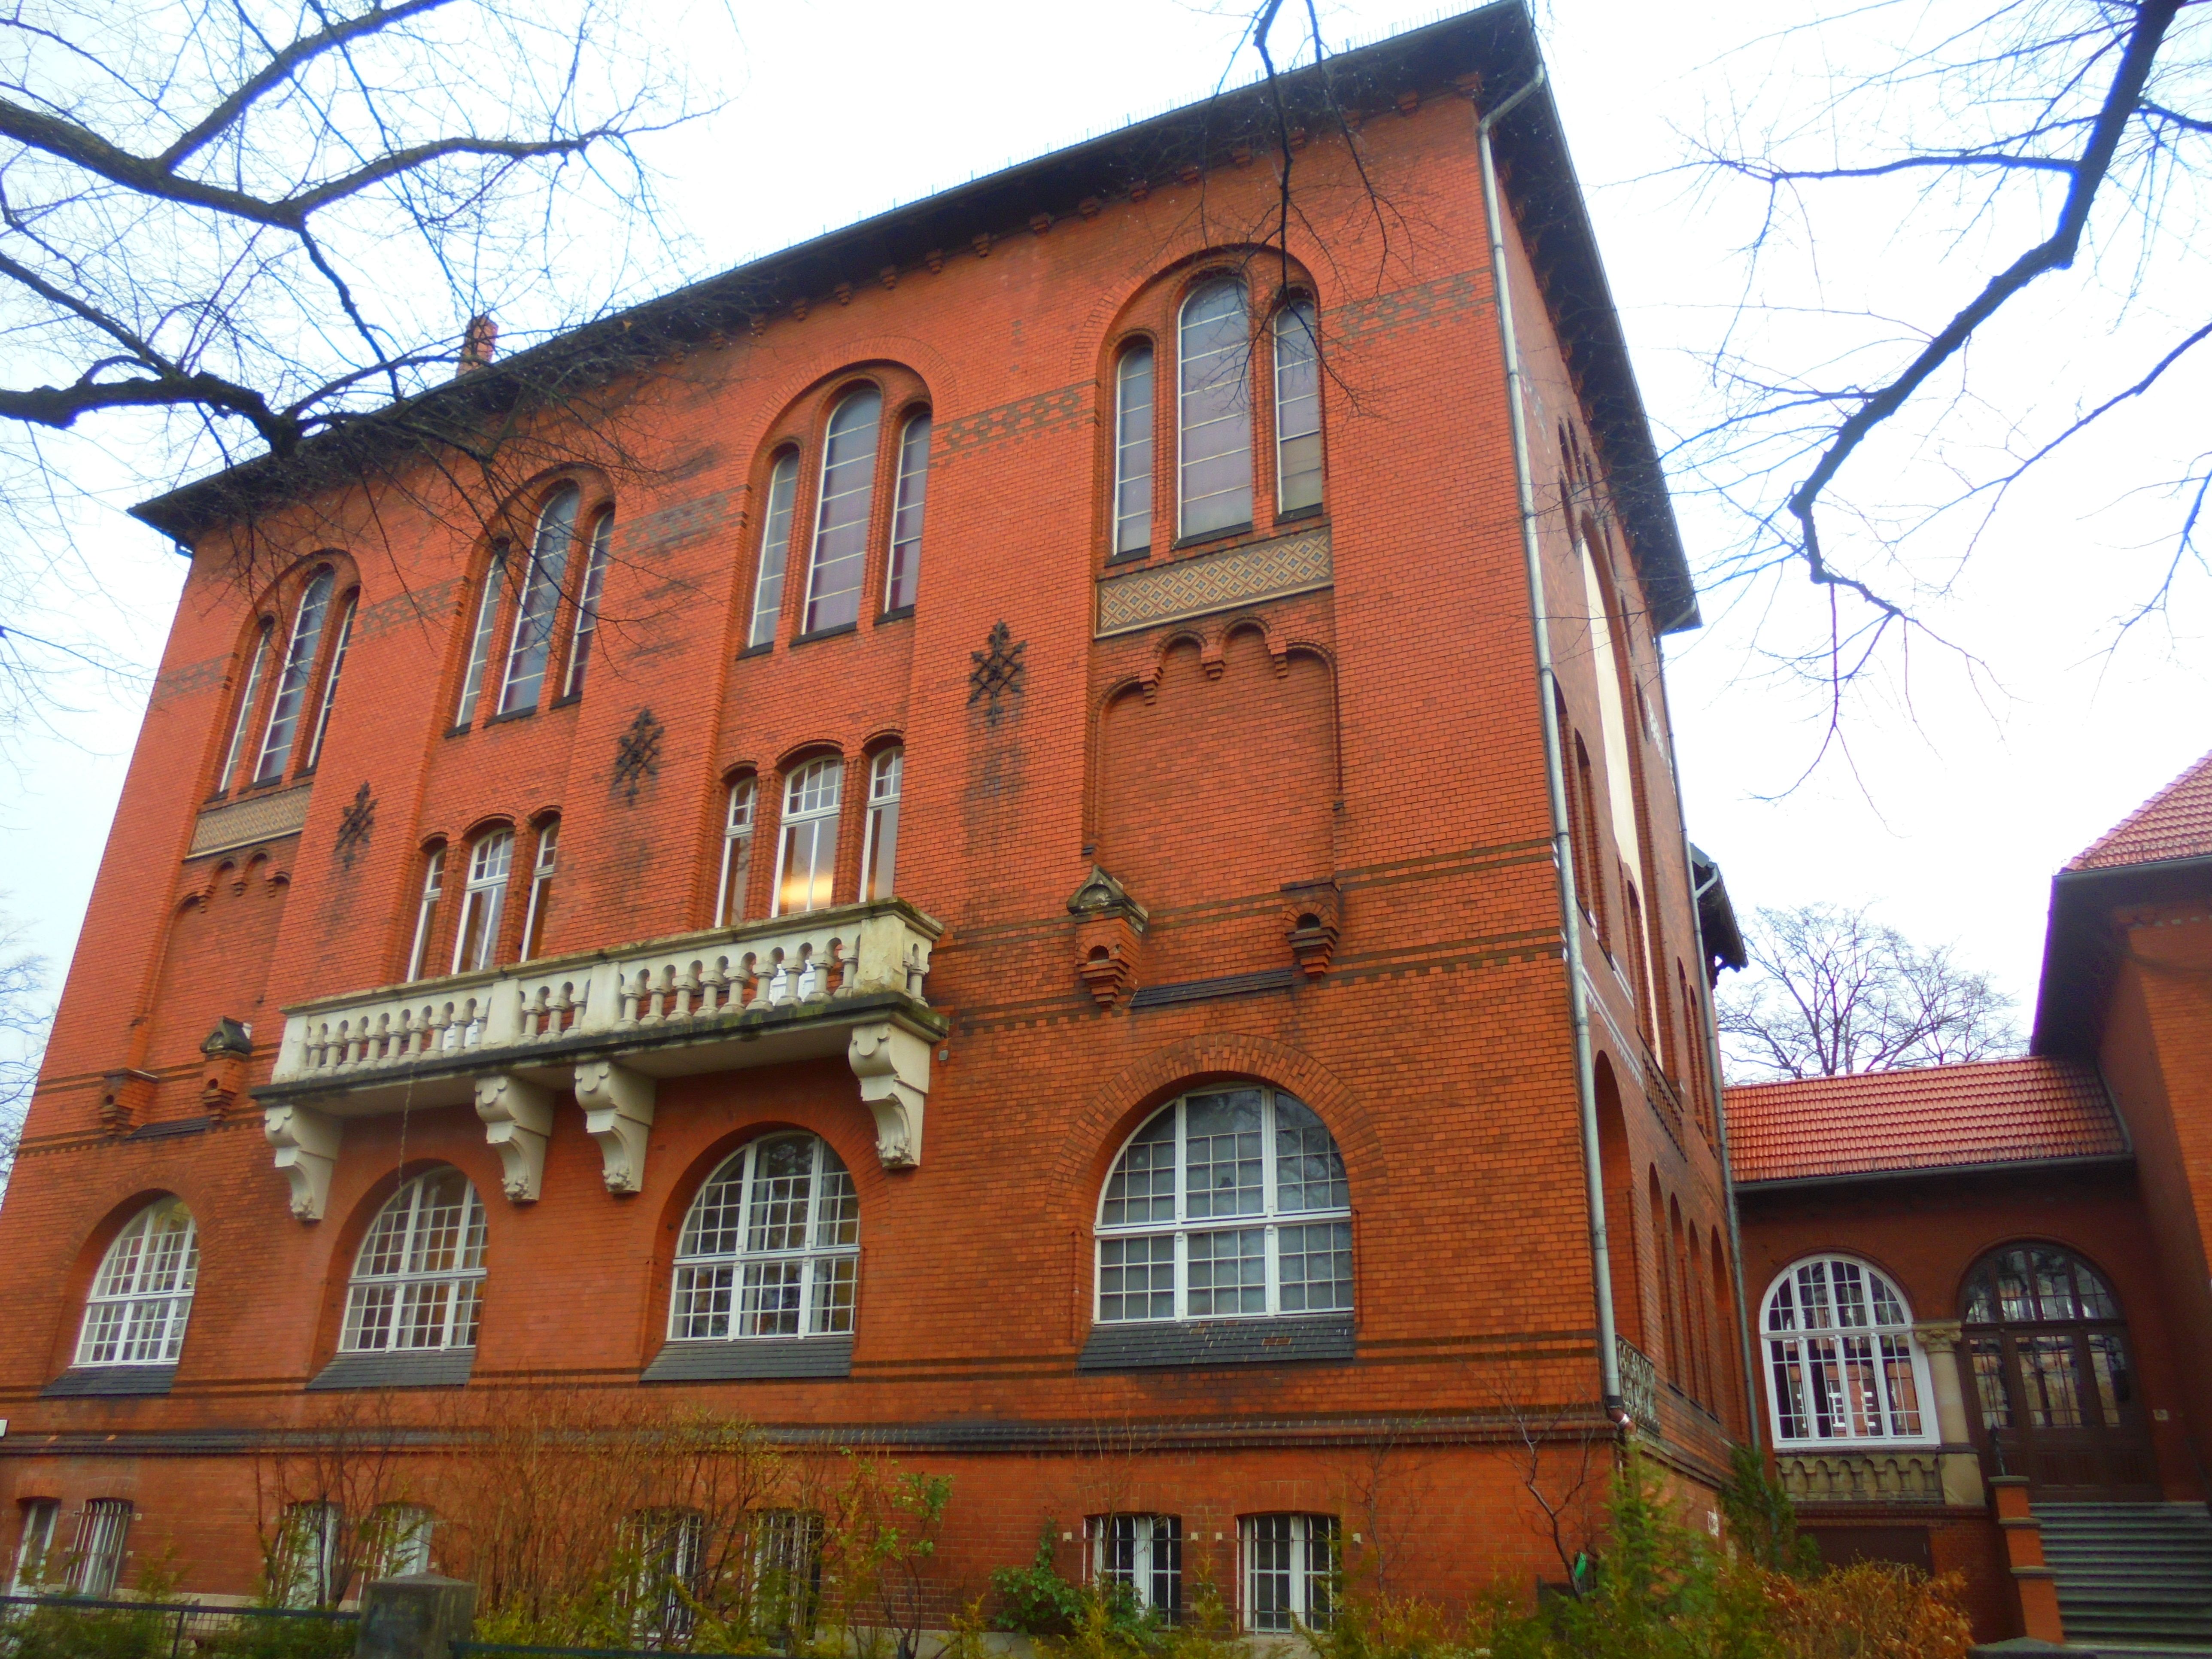 Lilienthal Gymnasium